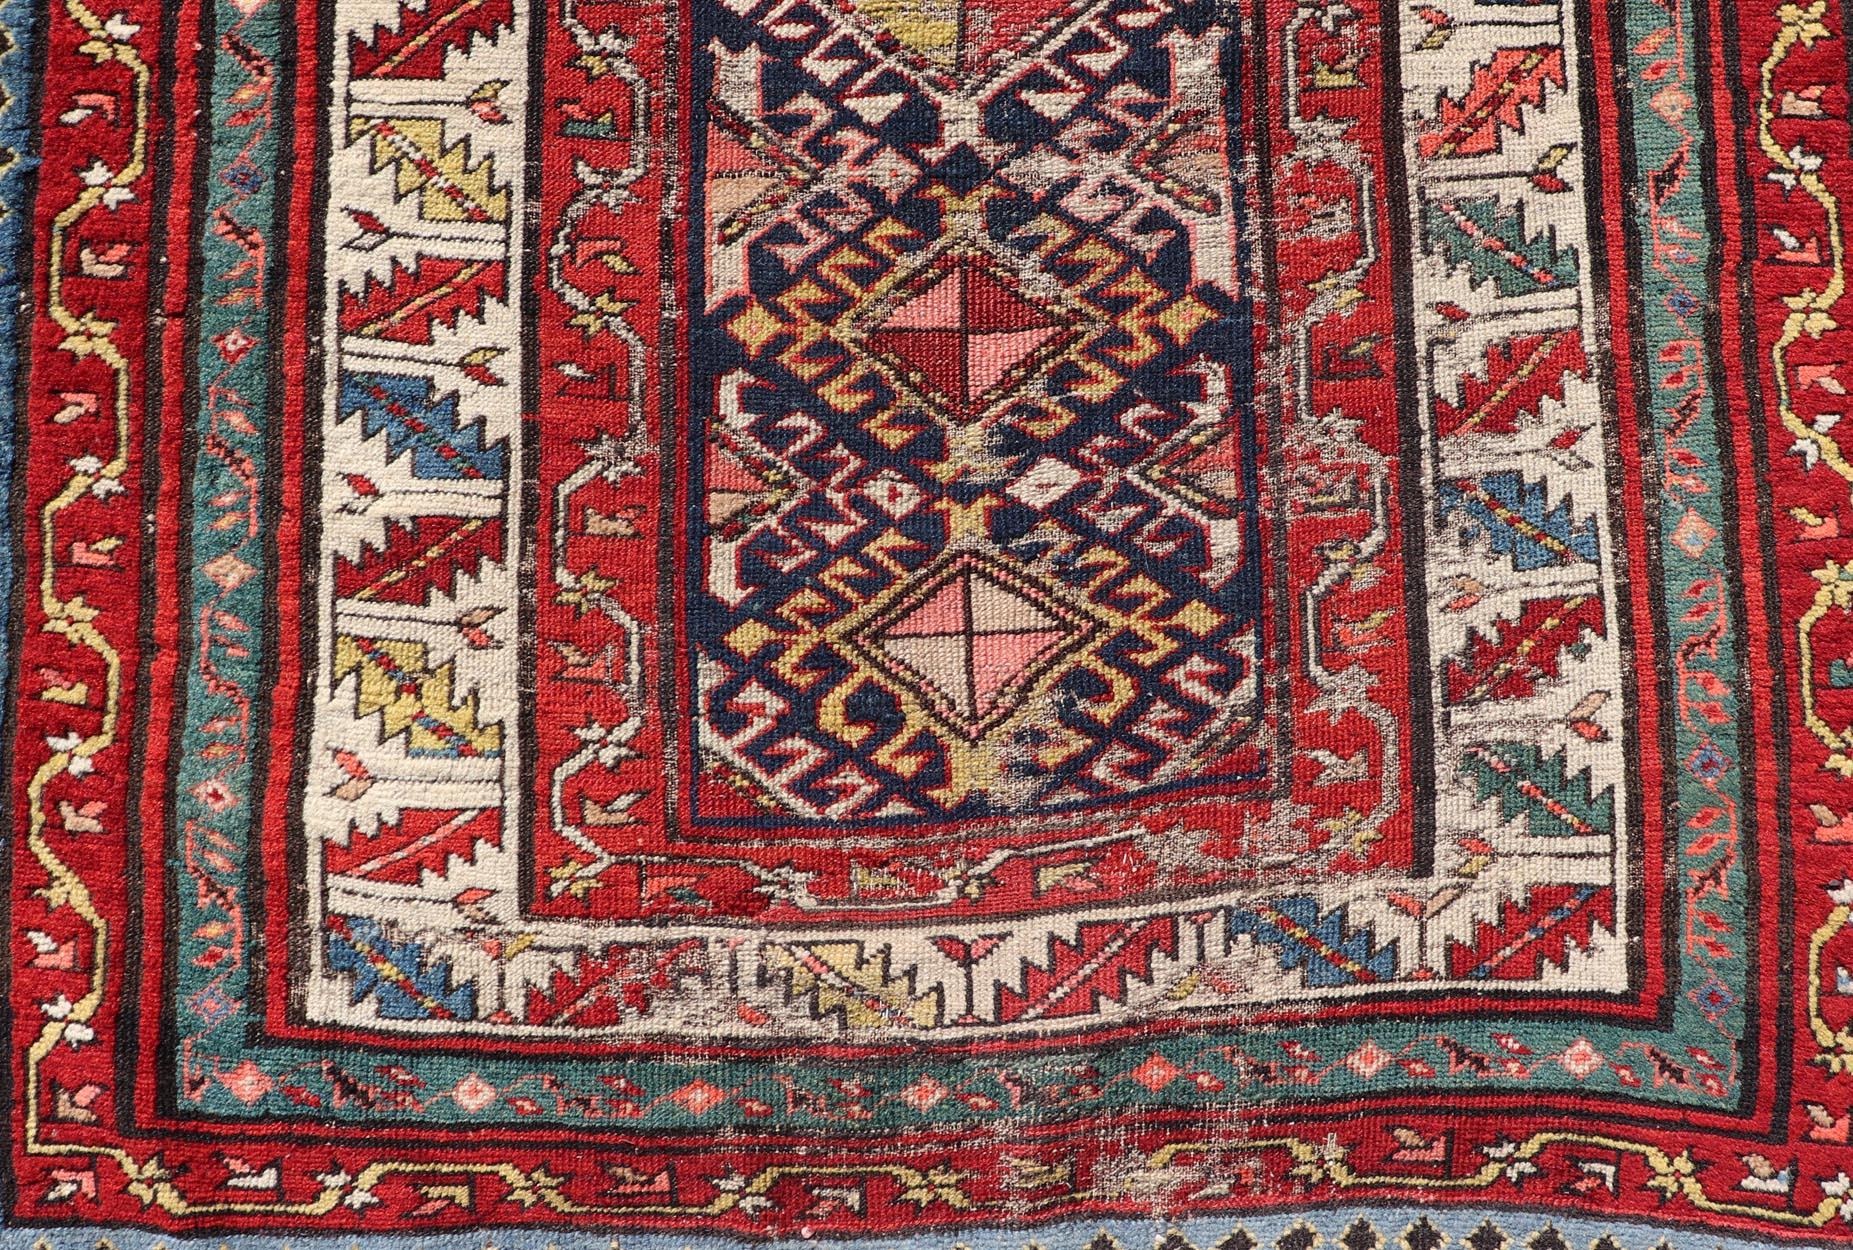 Distressed Geometric Medallion antique Caucasian Kazak rug in lighter tones. Keivan Woven Arts / rug KBE-220101, country of origin / type: Iran / Caucasian Kazak, circa 1900.

Measures: 3'5 x 10'3